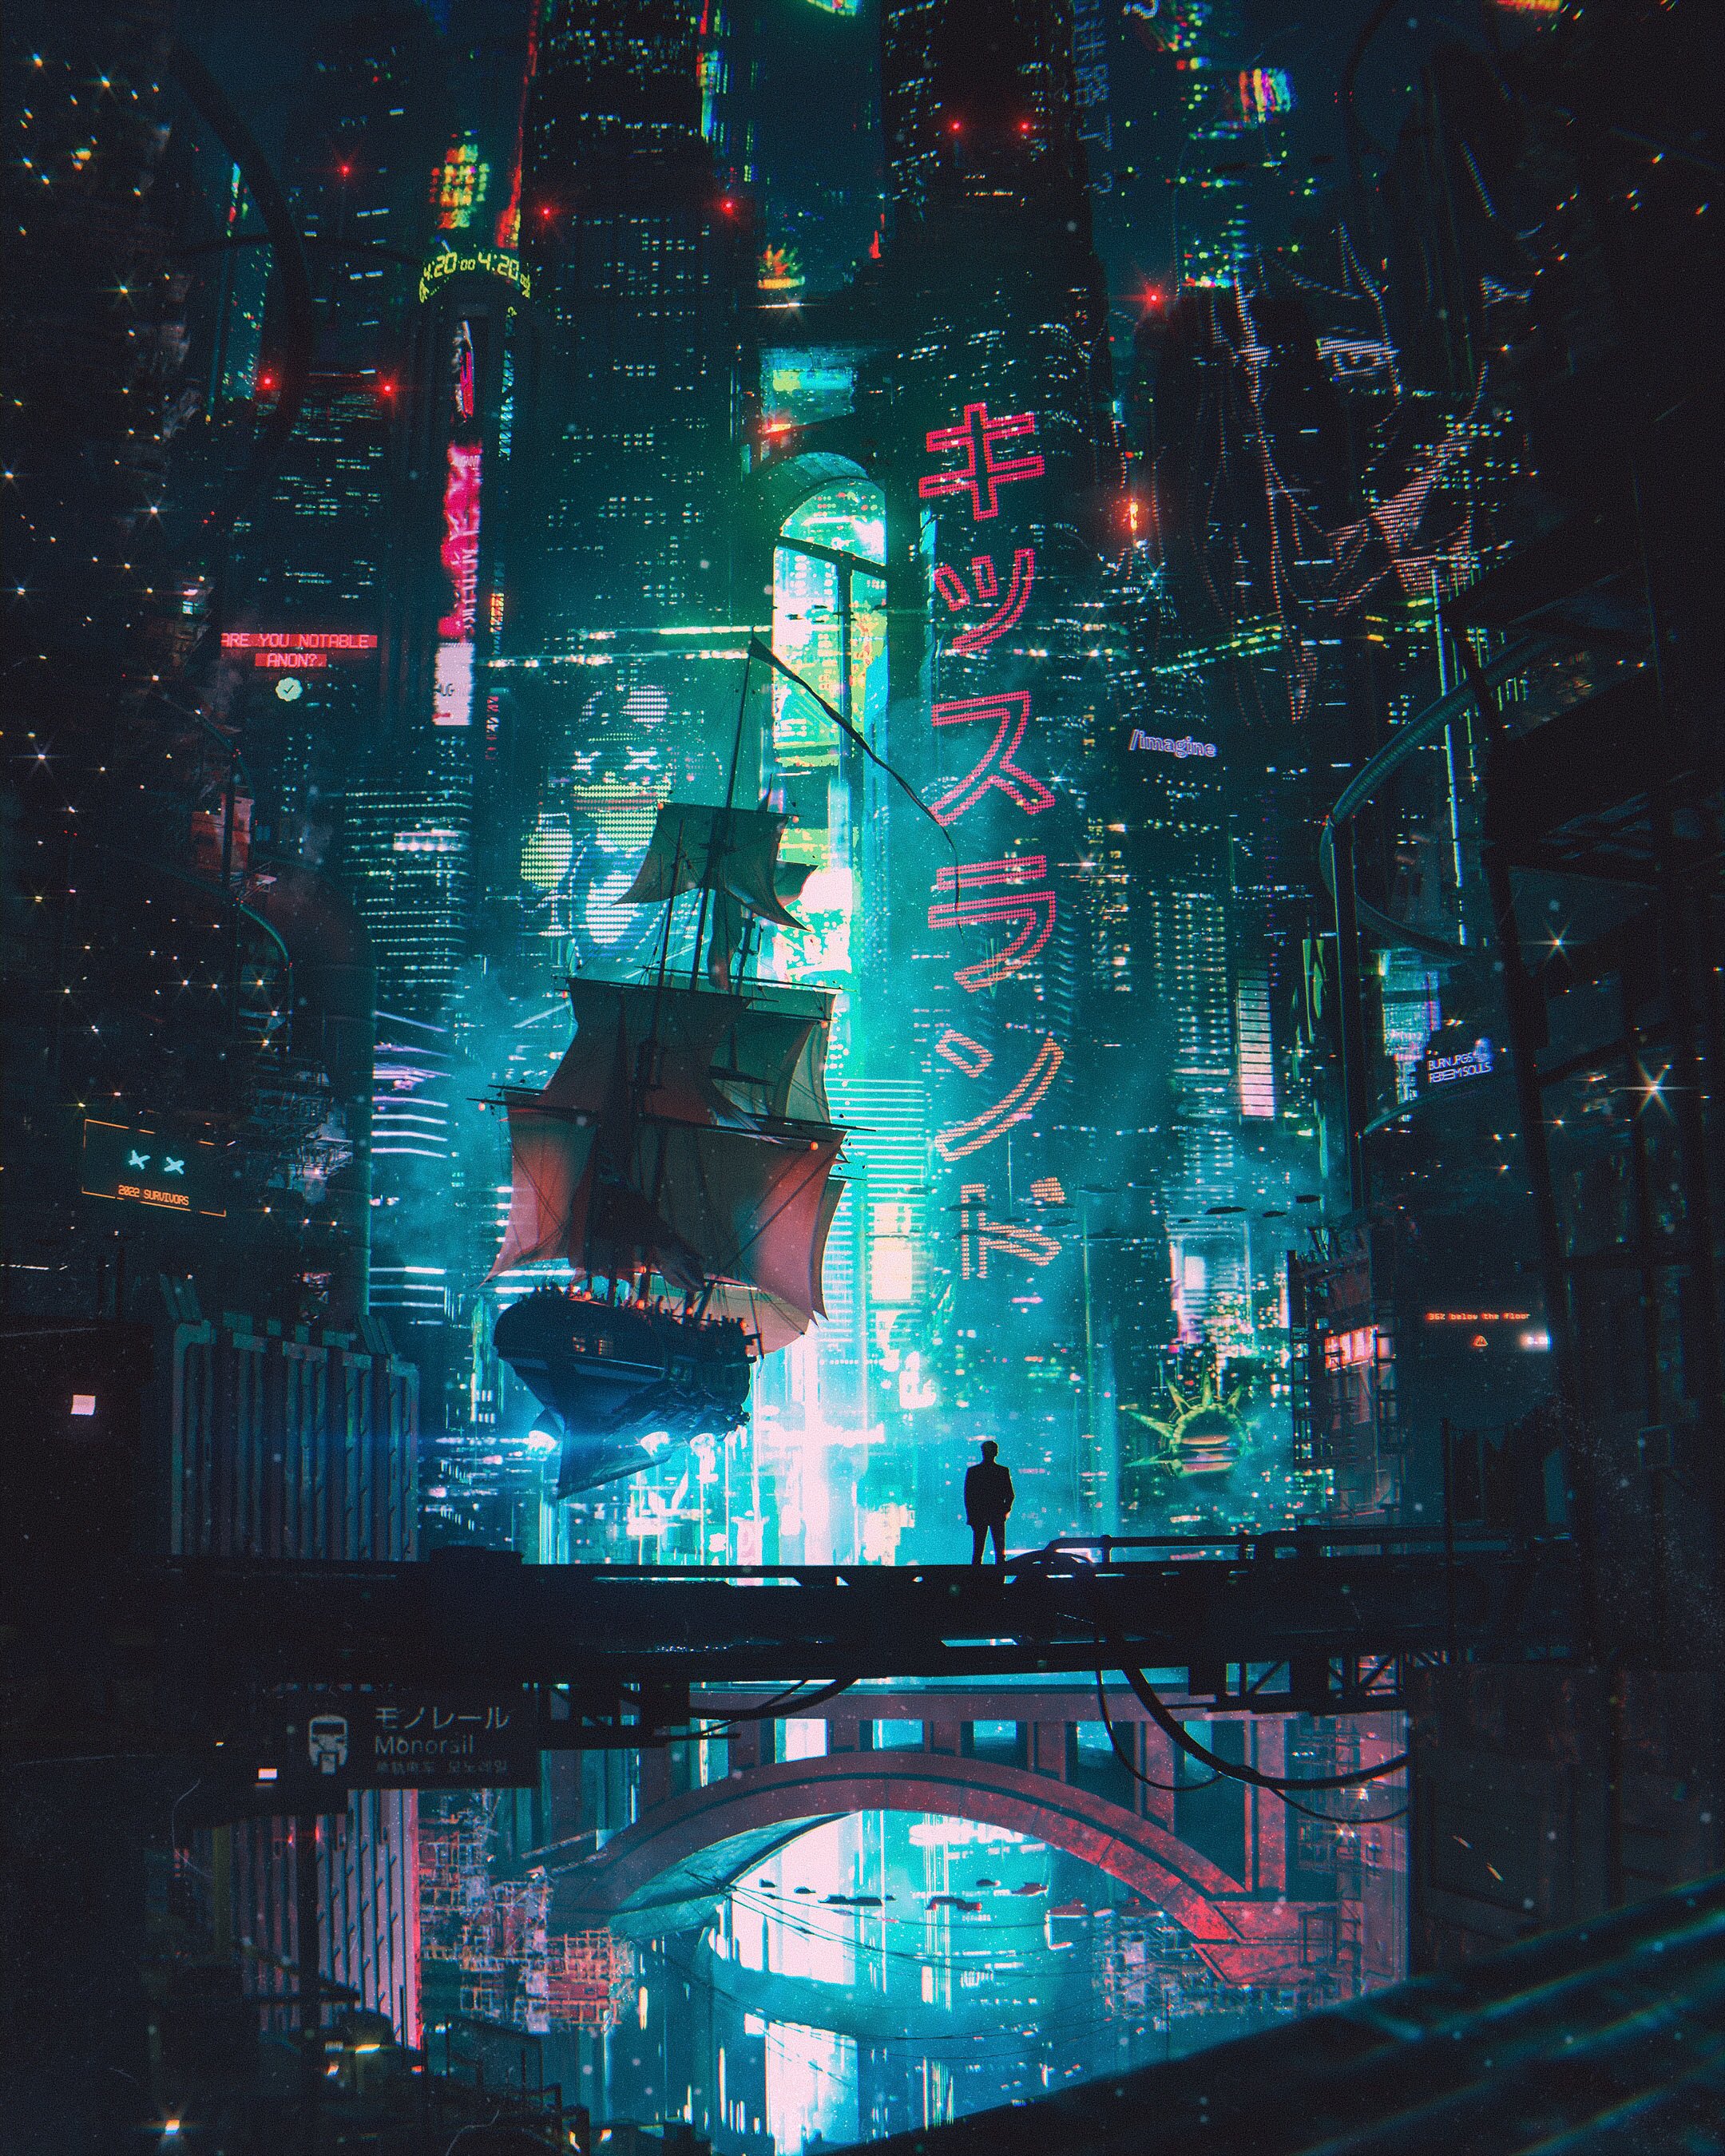 General 2160x2700 city cyberpunk science fiction neon artwork night city lights digital art building Japanese ship bridge portrait display